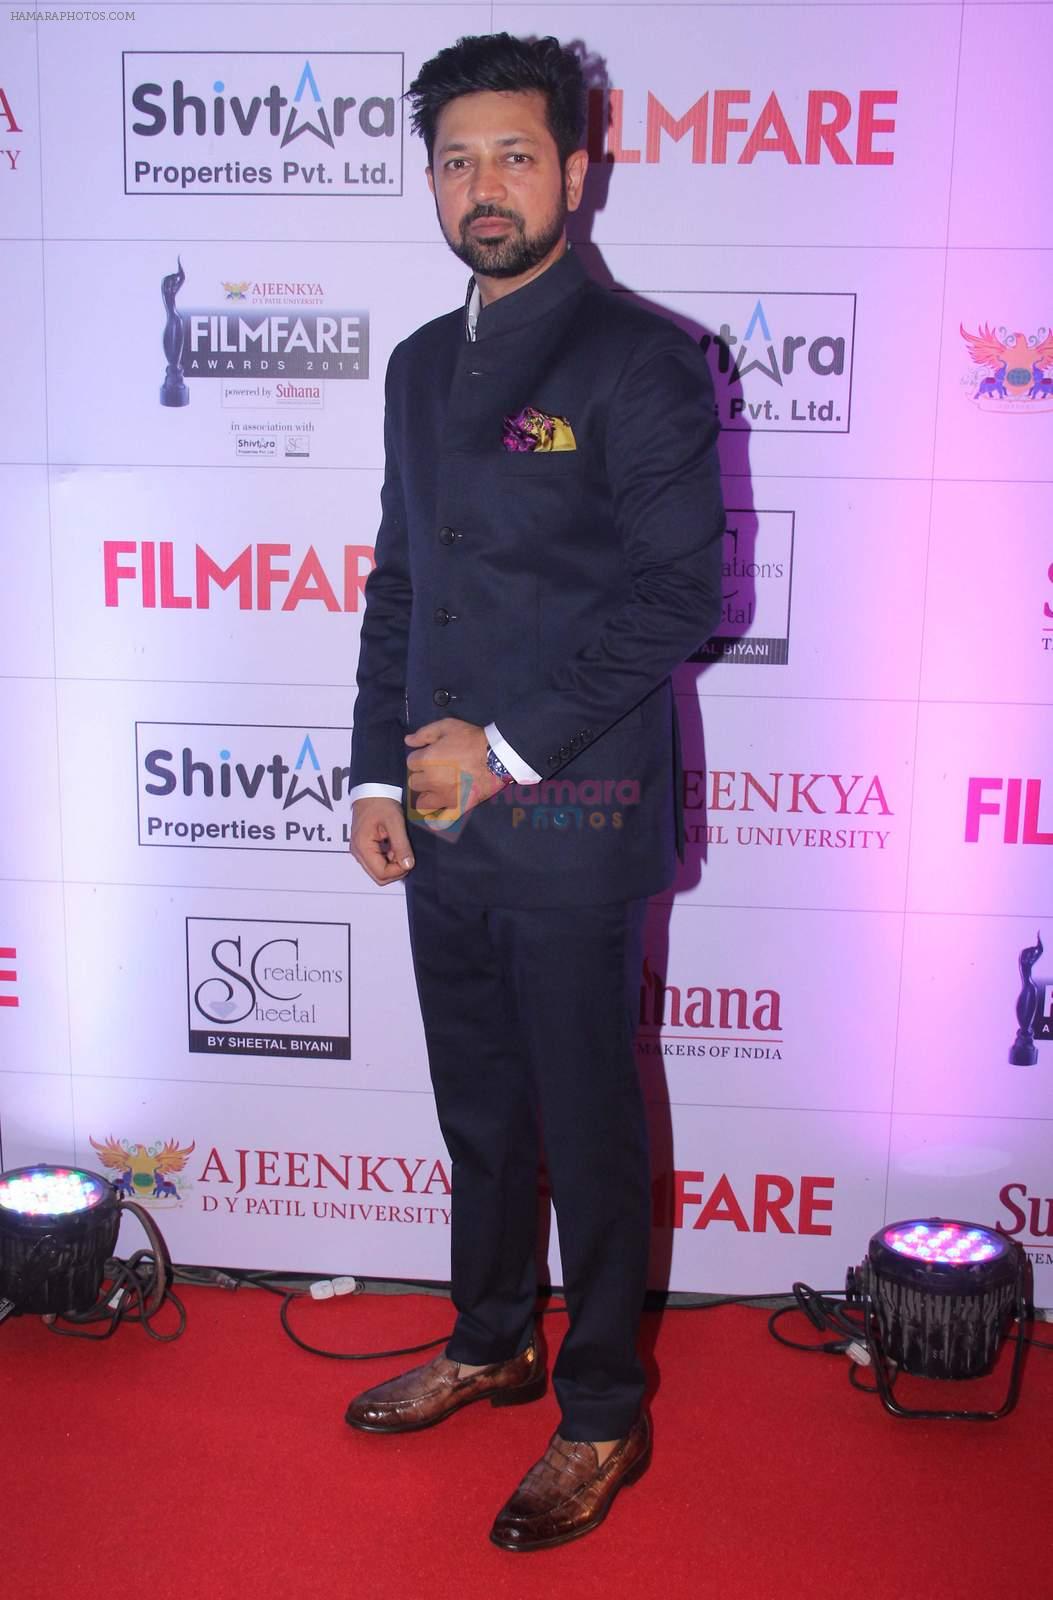 Sujit at the Red Carpet of _Ajeenkya DY Patil University Filmfare Awards